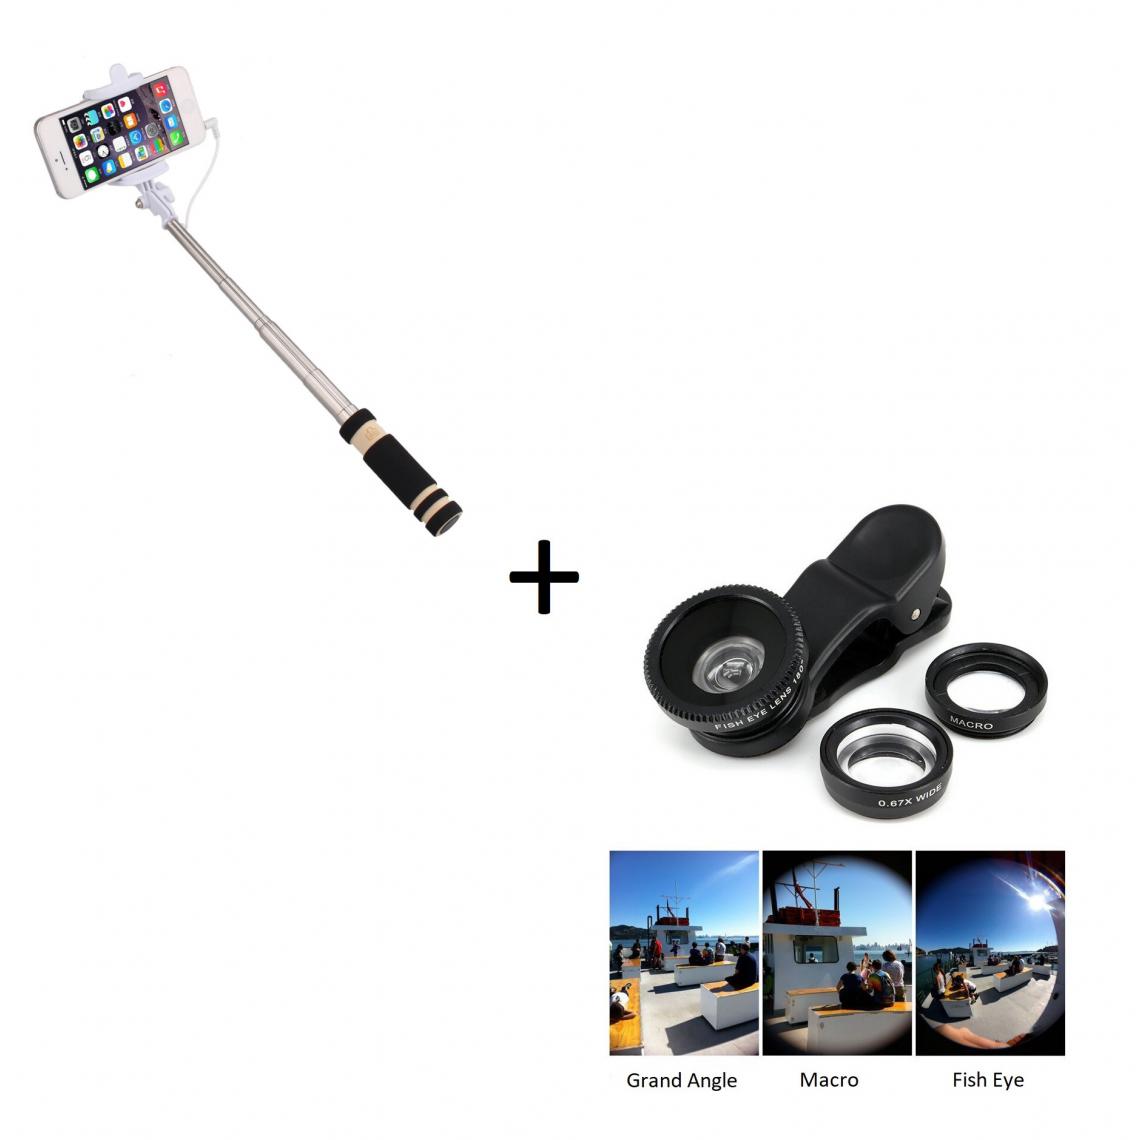 Shot - Pack Photo pour HUAWEI Mate 30 Pro Smartphone (Mini Selfie Stick + Objectif Pince 3 en 1) Android IOS Bouton - Autres accessoires smartphone